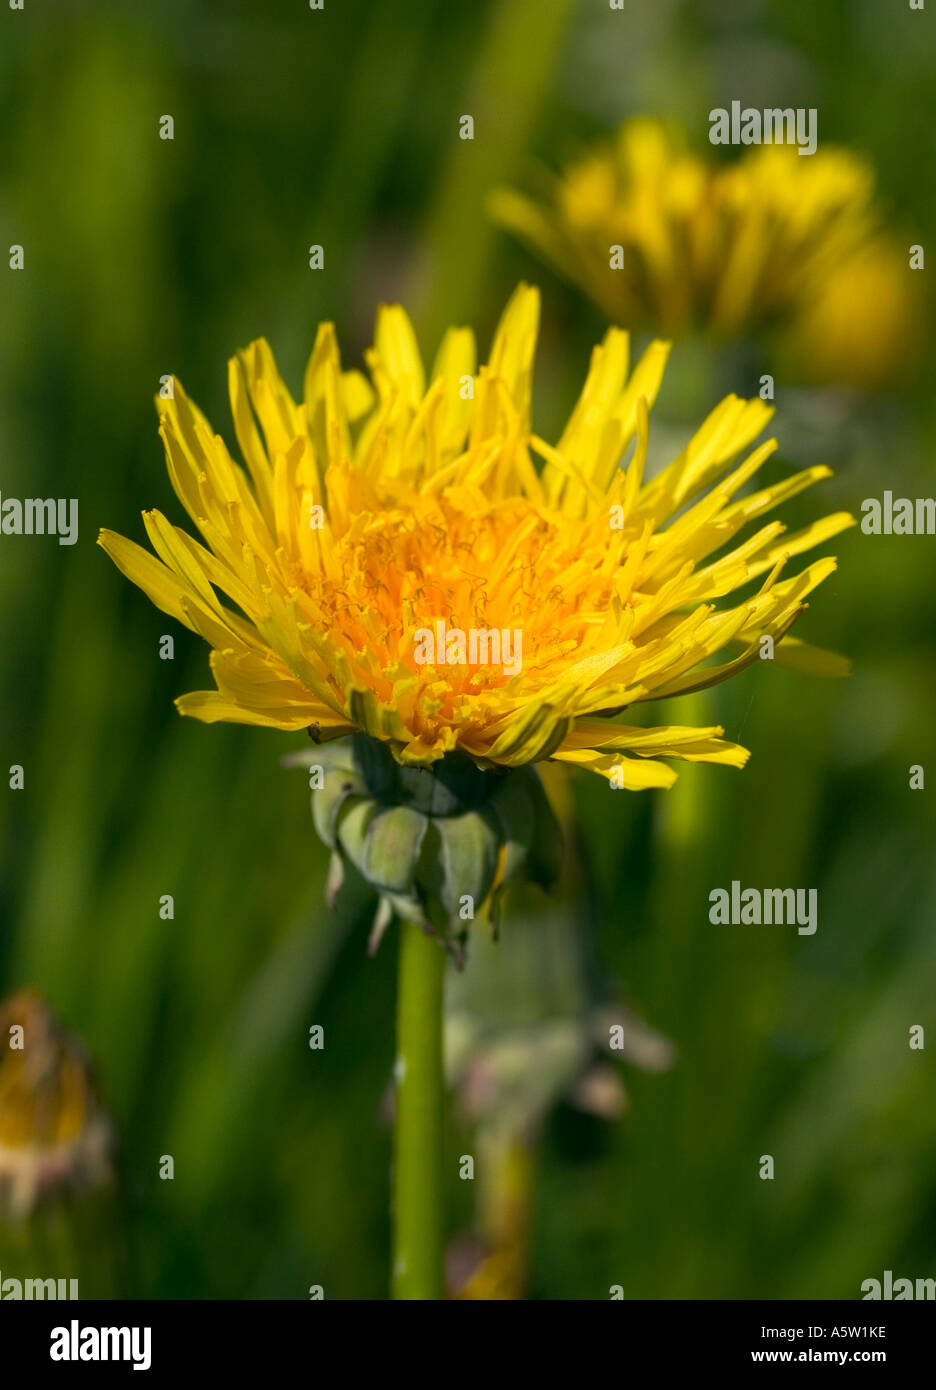 Close up of dandelion 'Taraxacum offiicinale' shot in natural environment Stock Photo